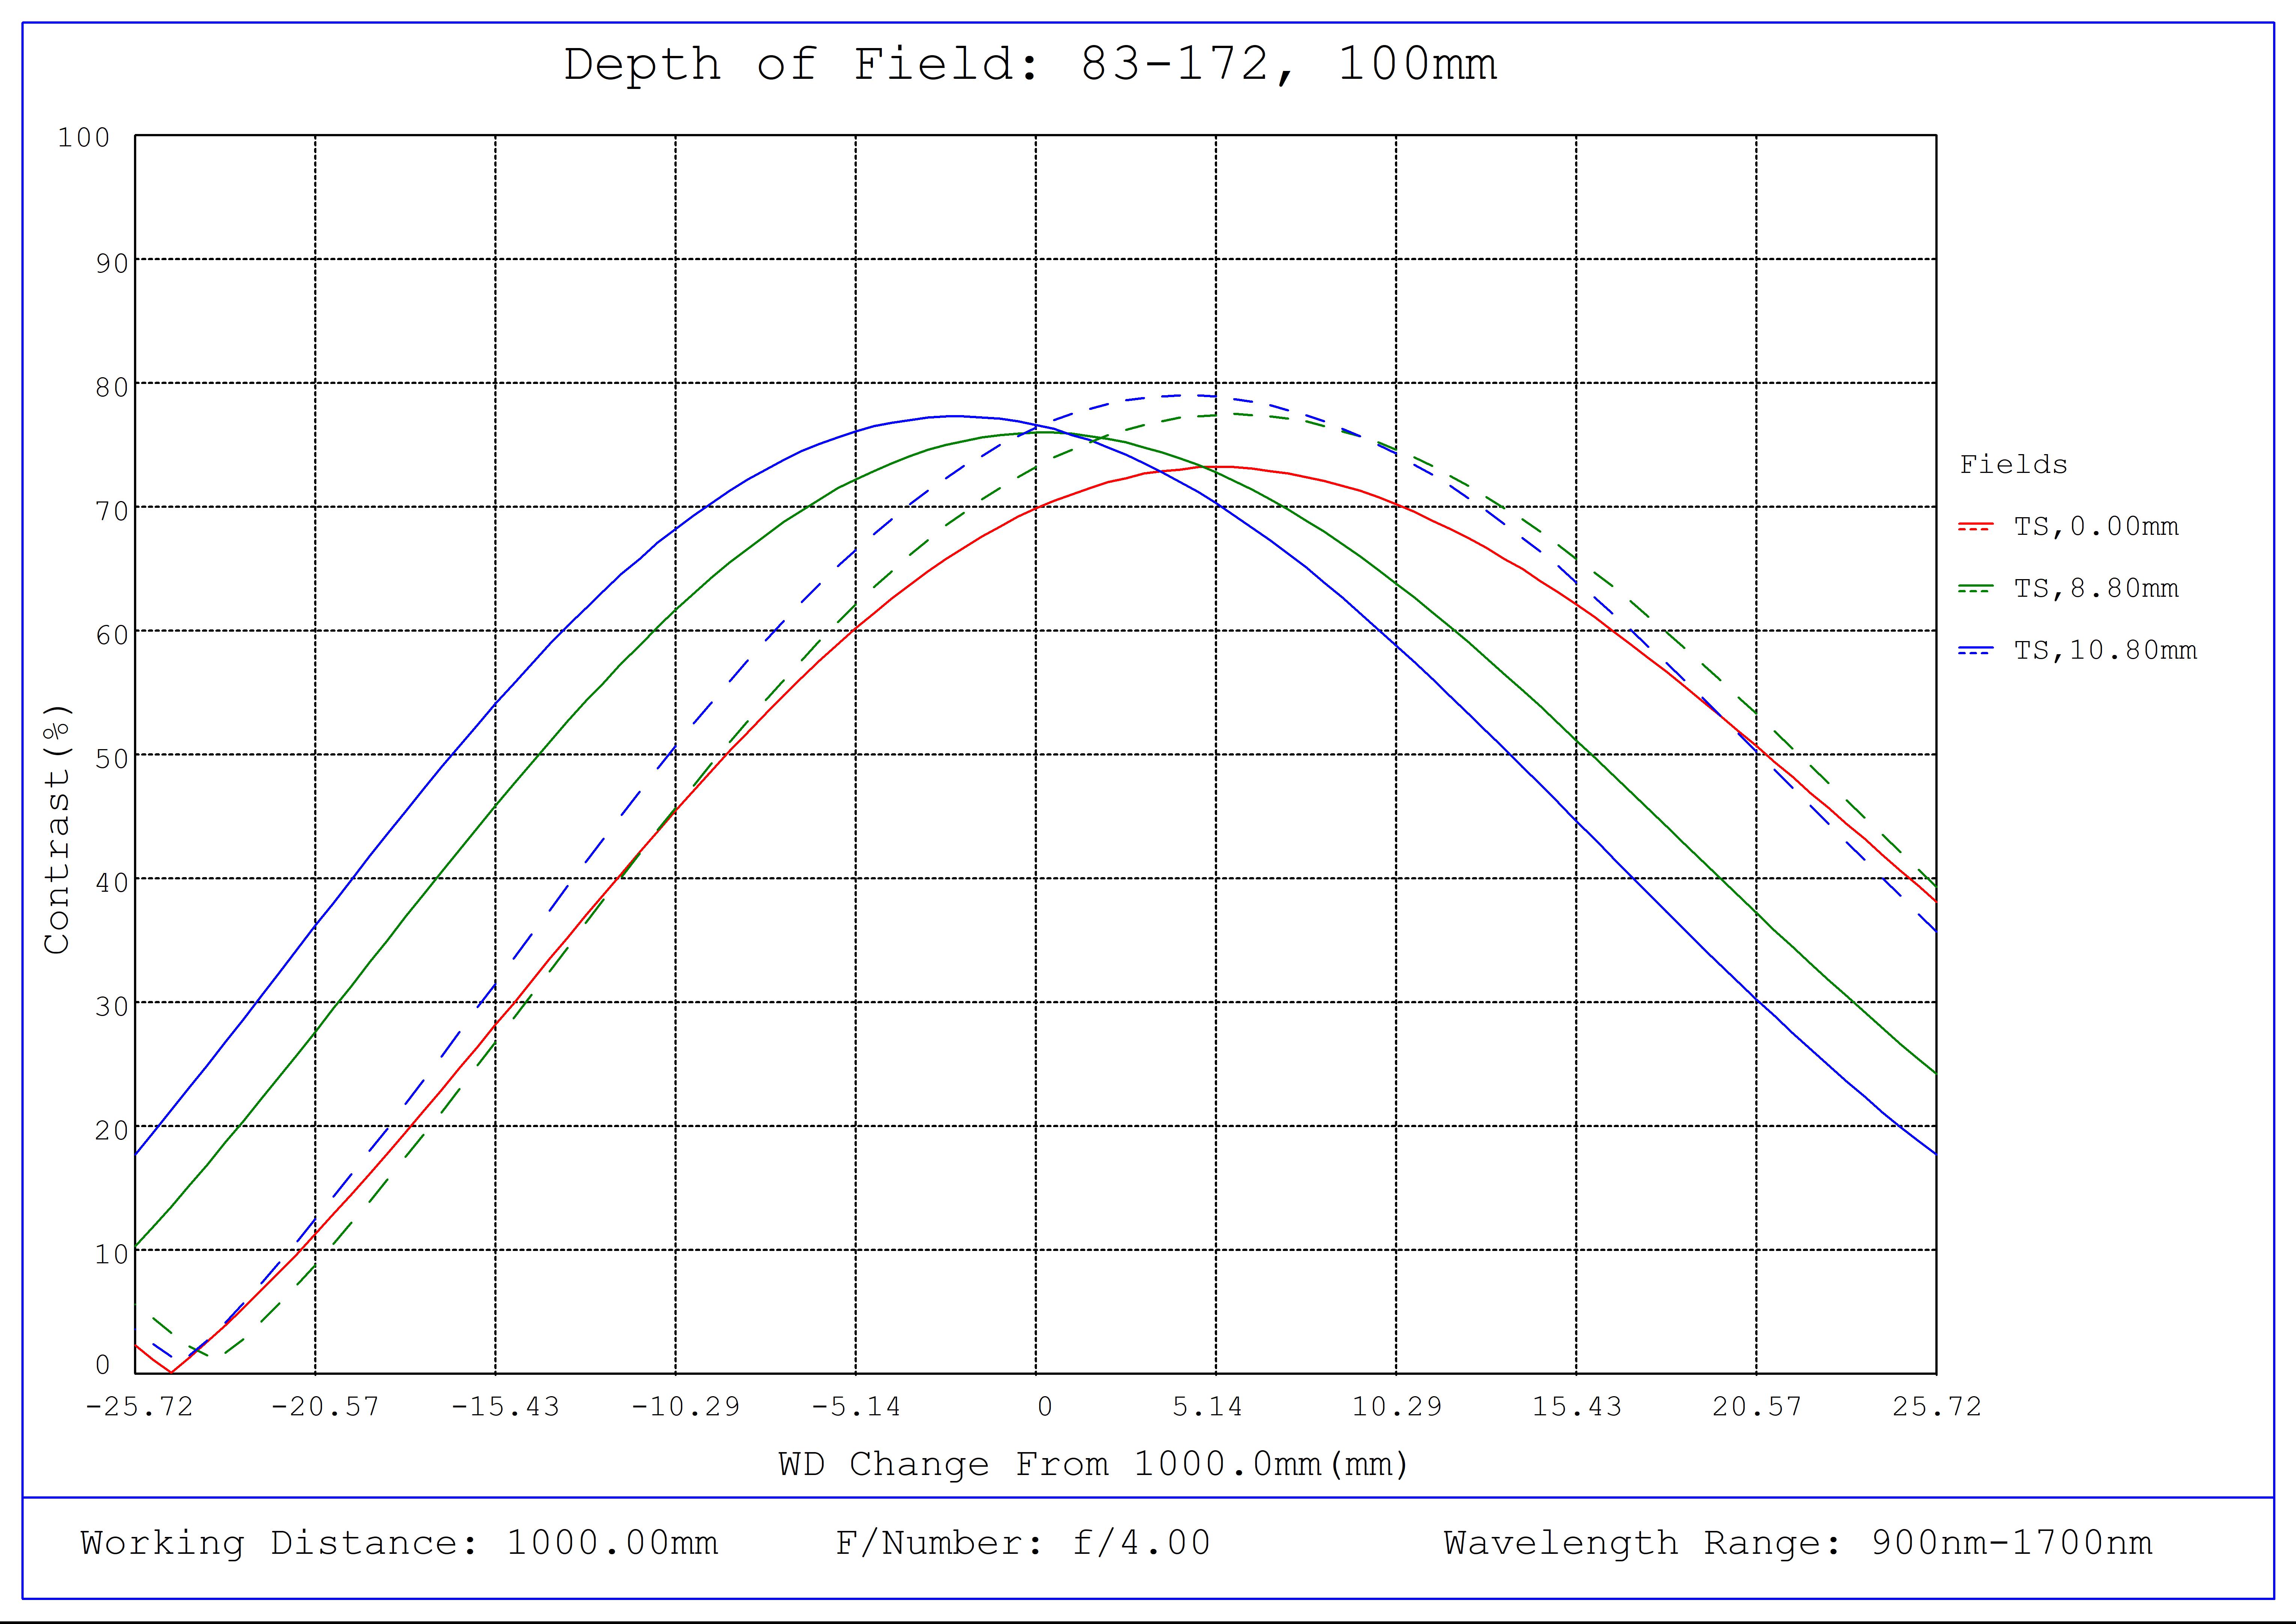 #83-172, 100mm SWIR Series Fixed Focal Length Lens, M42 x 1.0, Depth of Field Plot, 1000mm Working Distance, f4